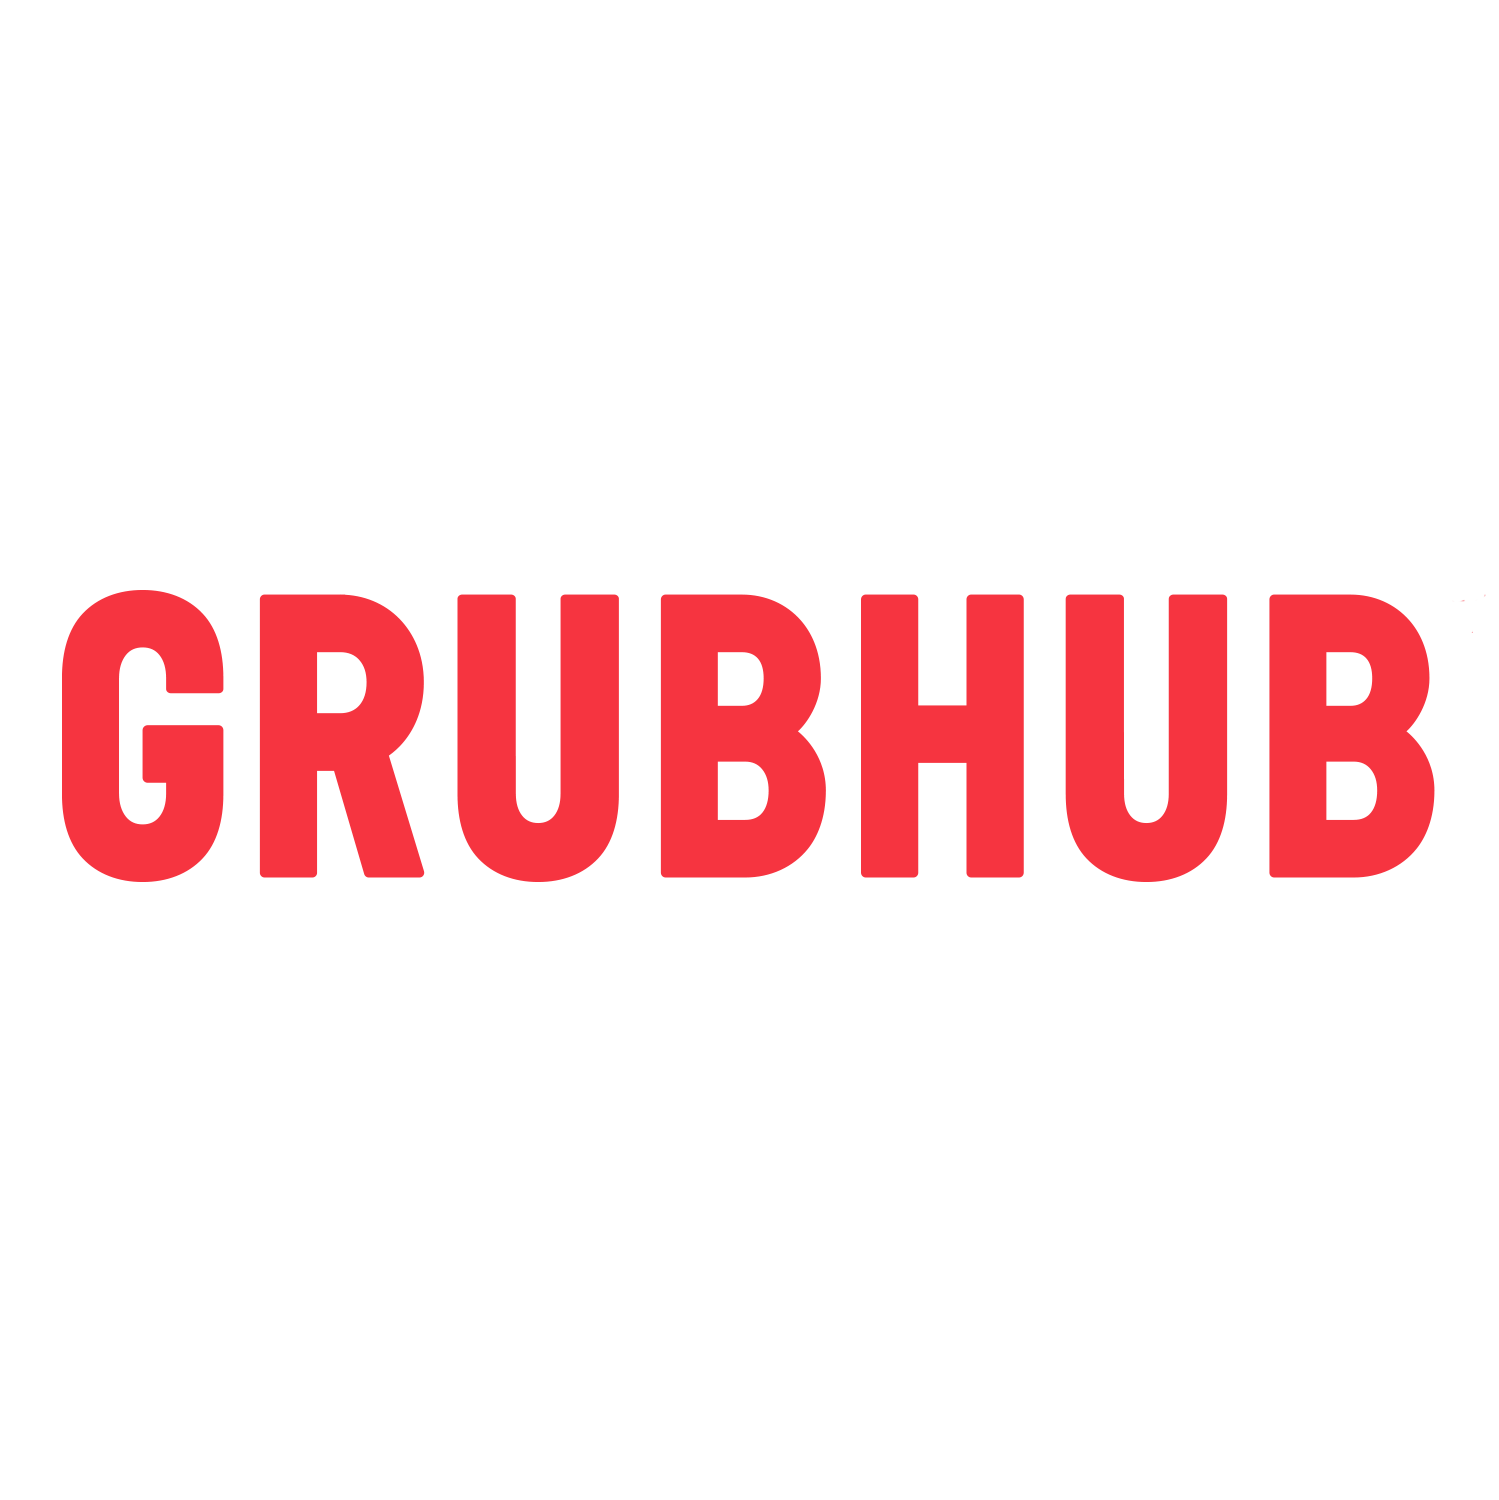 grubhub.png